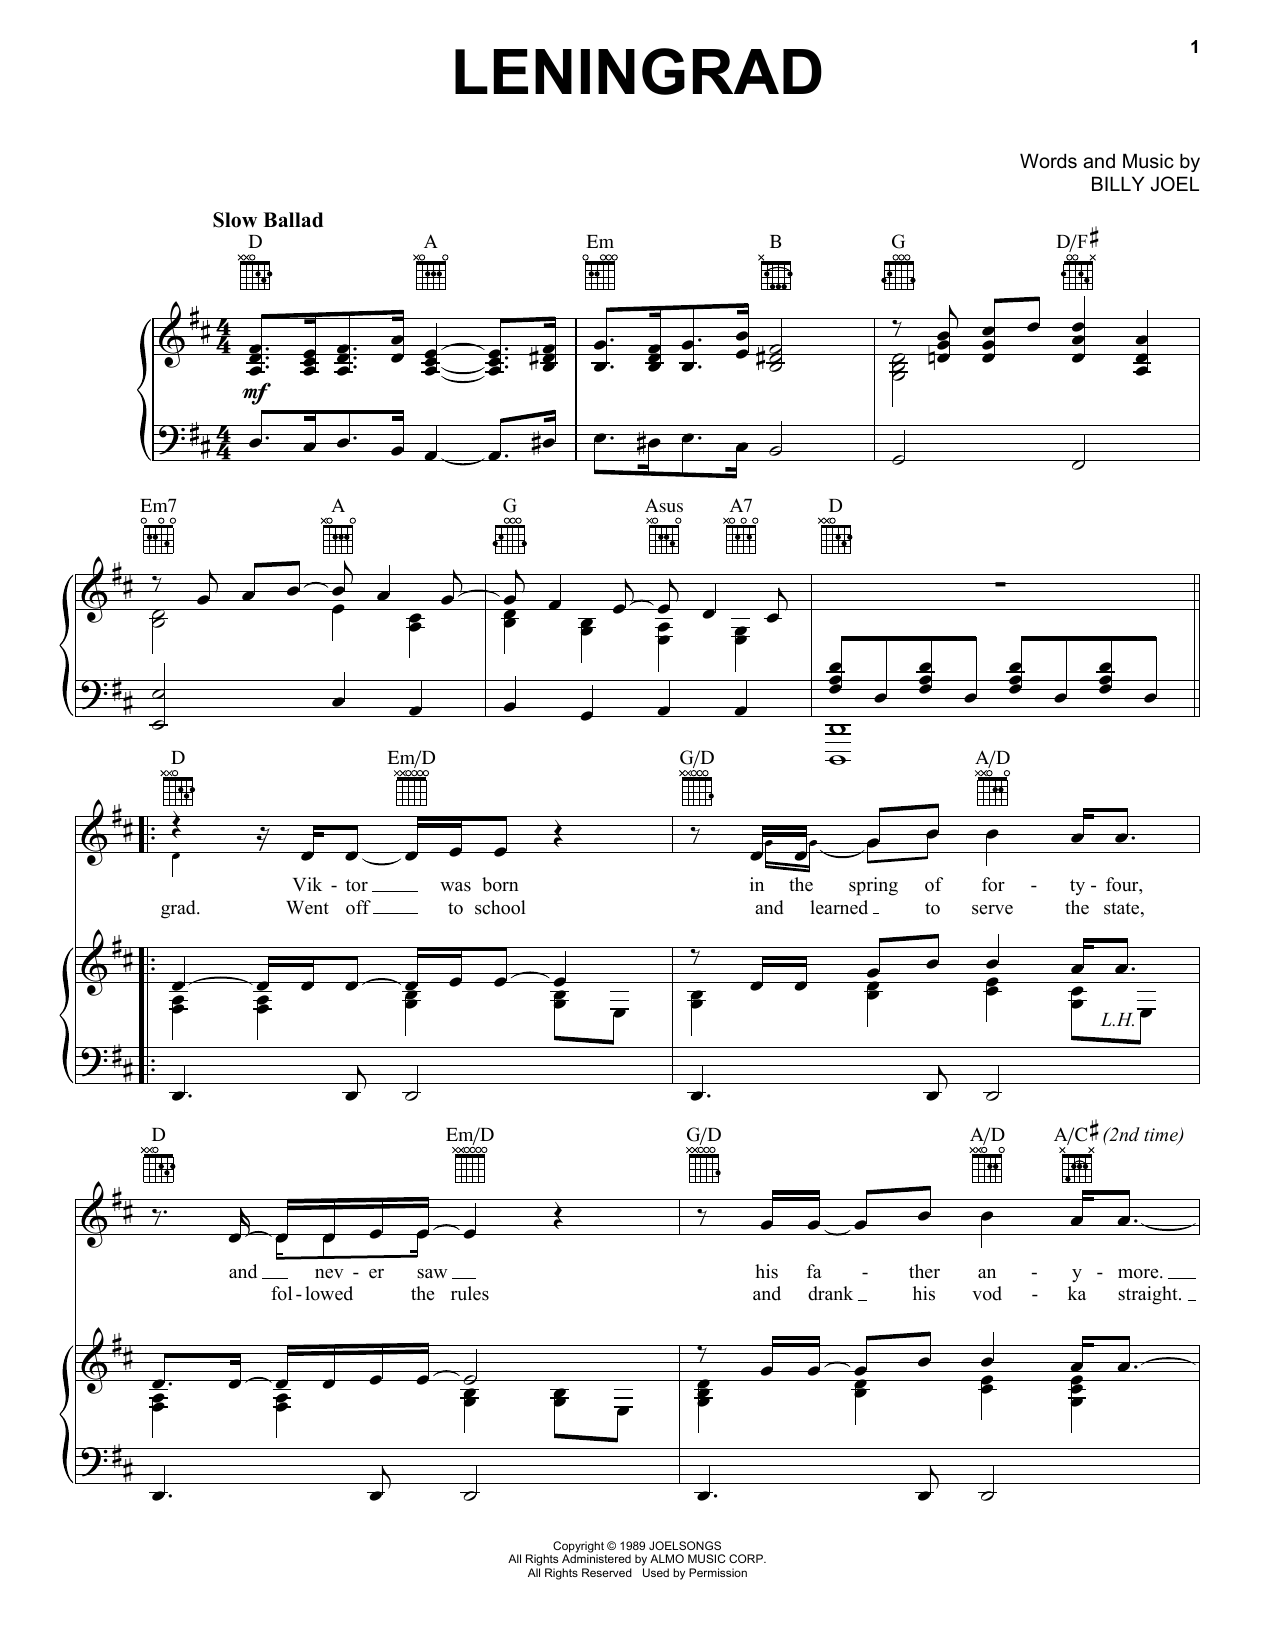 Billy Joel Leningrad Sheet Music Notes & Chords for Melody Line, Lyrics & Chords - Download or Print PDF